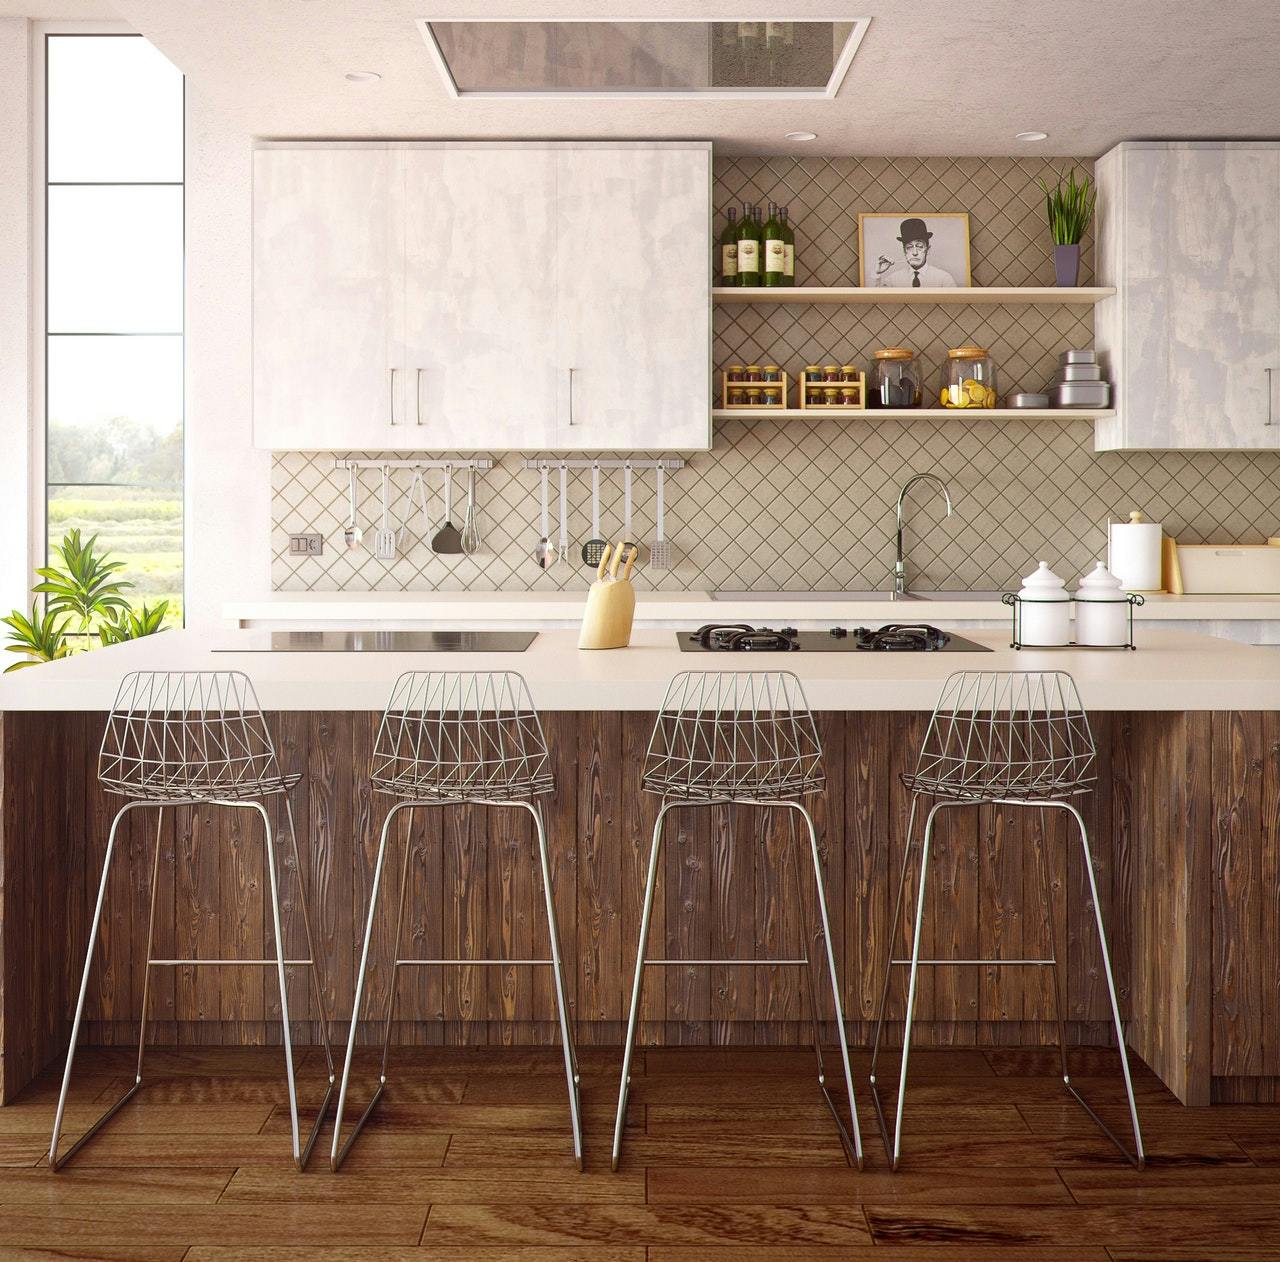  A modern minimalist kitchen neatly presented 